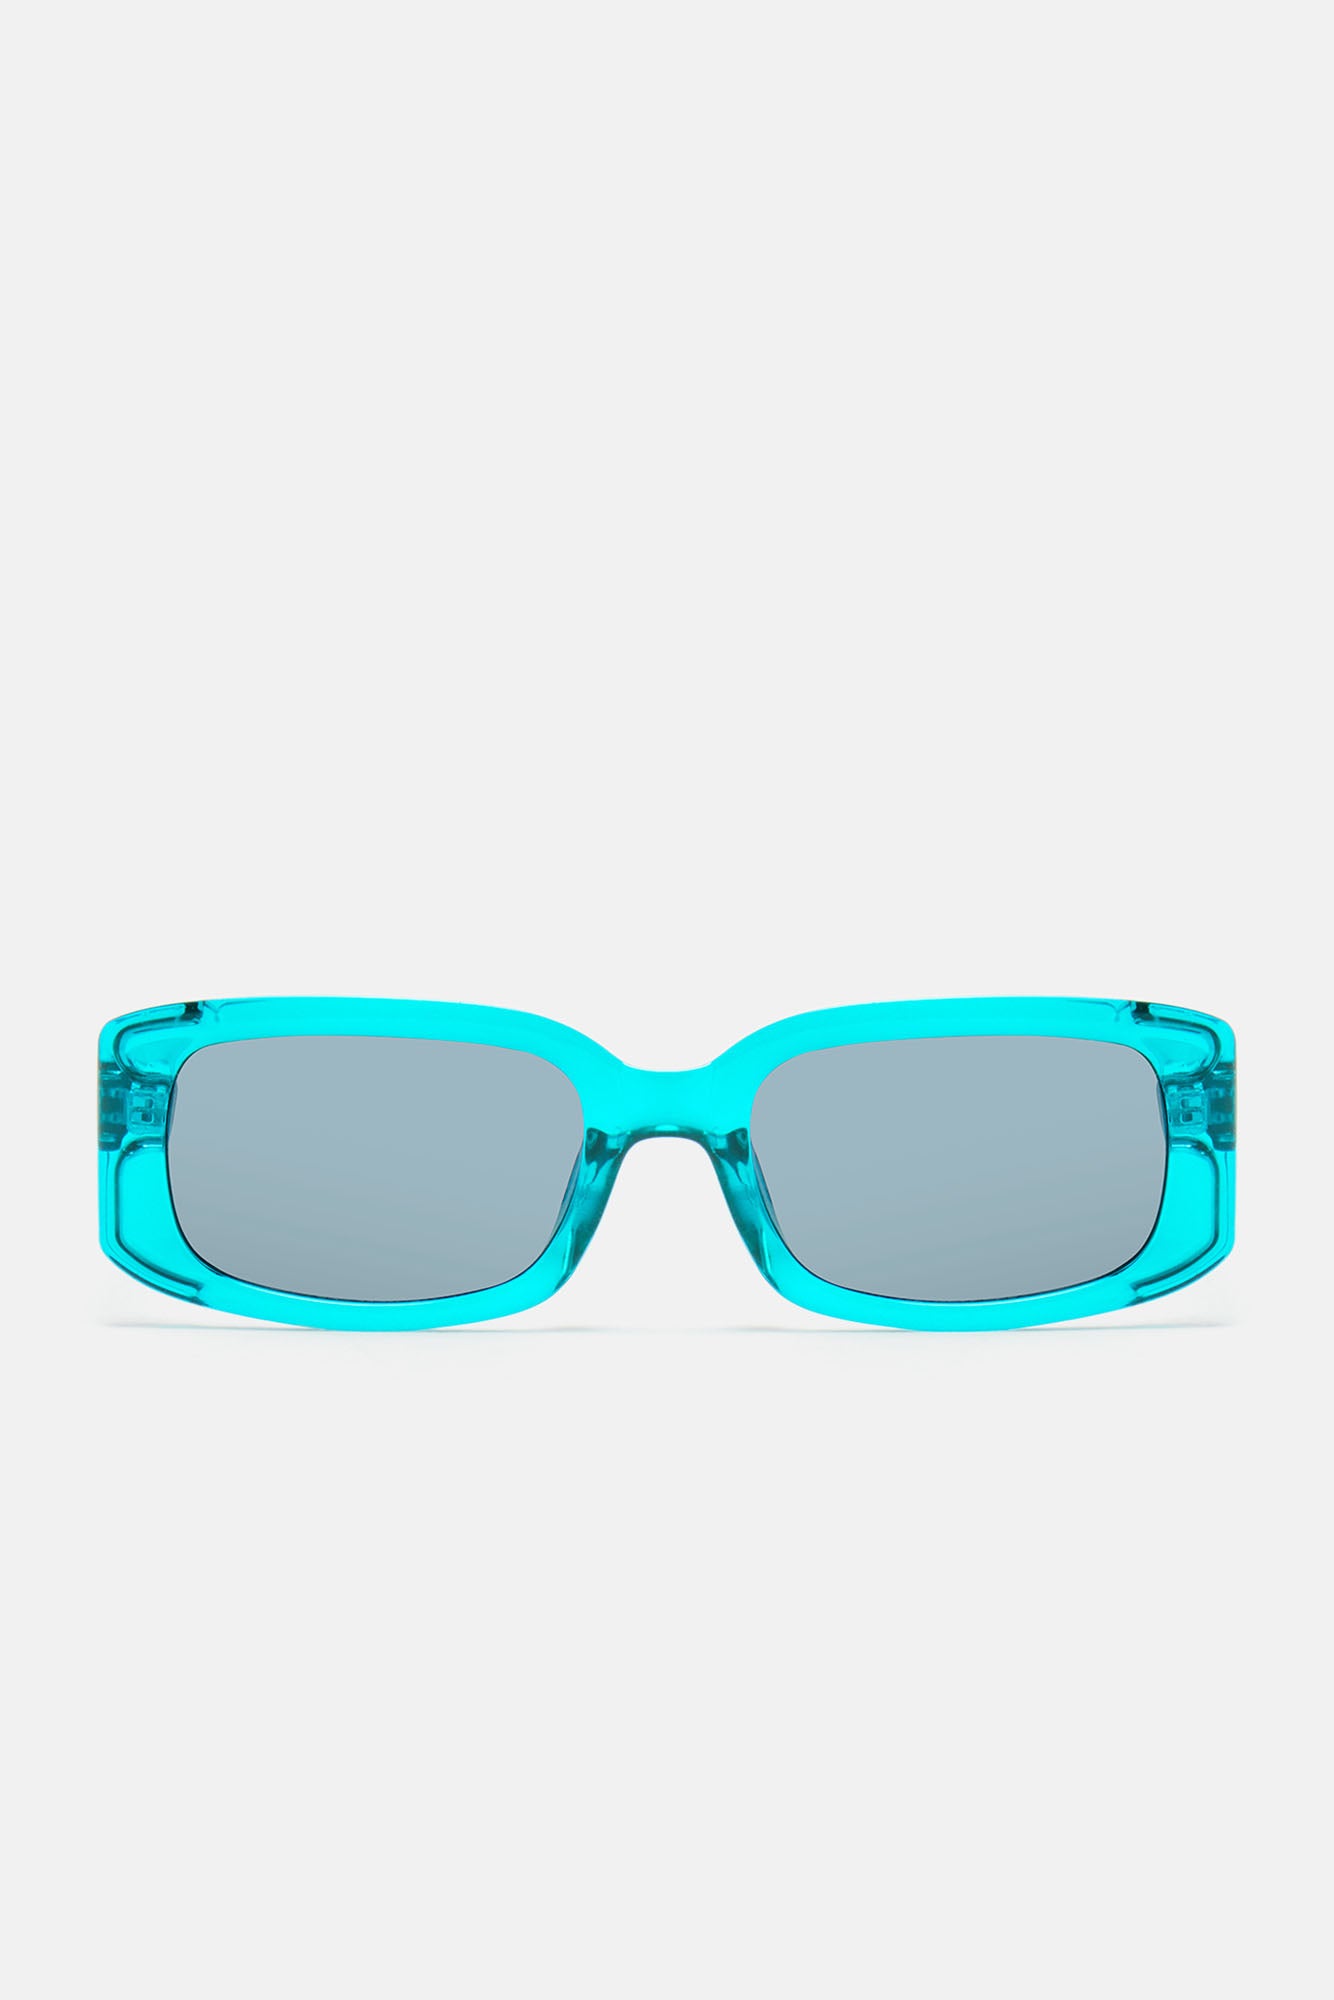 Women's I Want It All Sunglasses in Blue by Fashion Nova | Fashion Nova